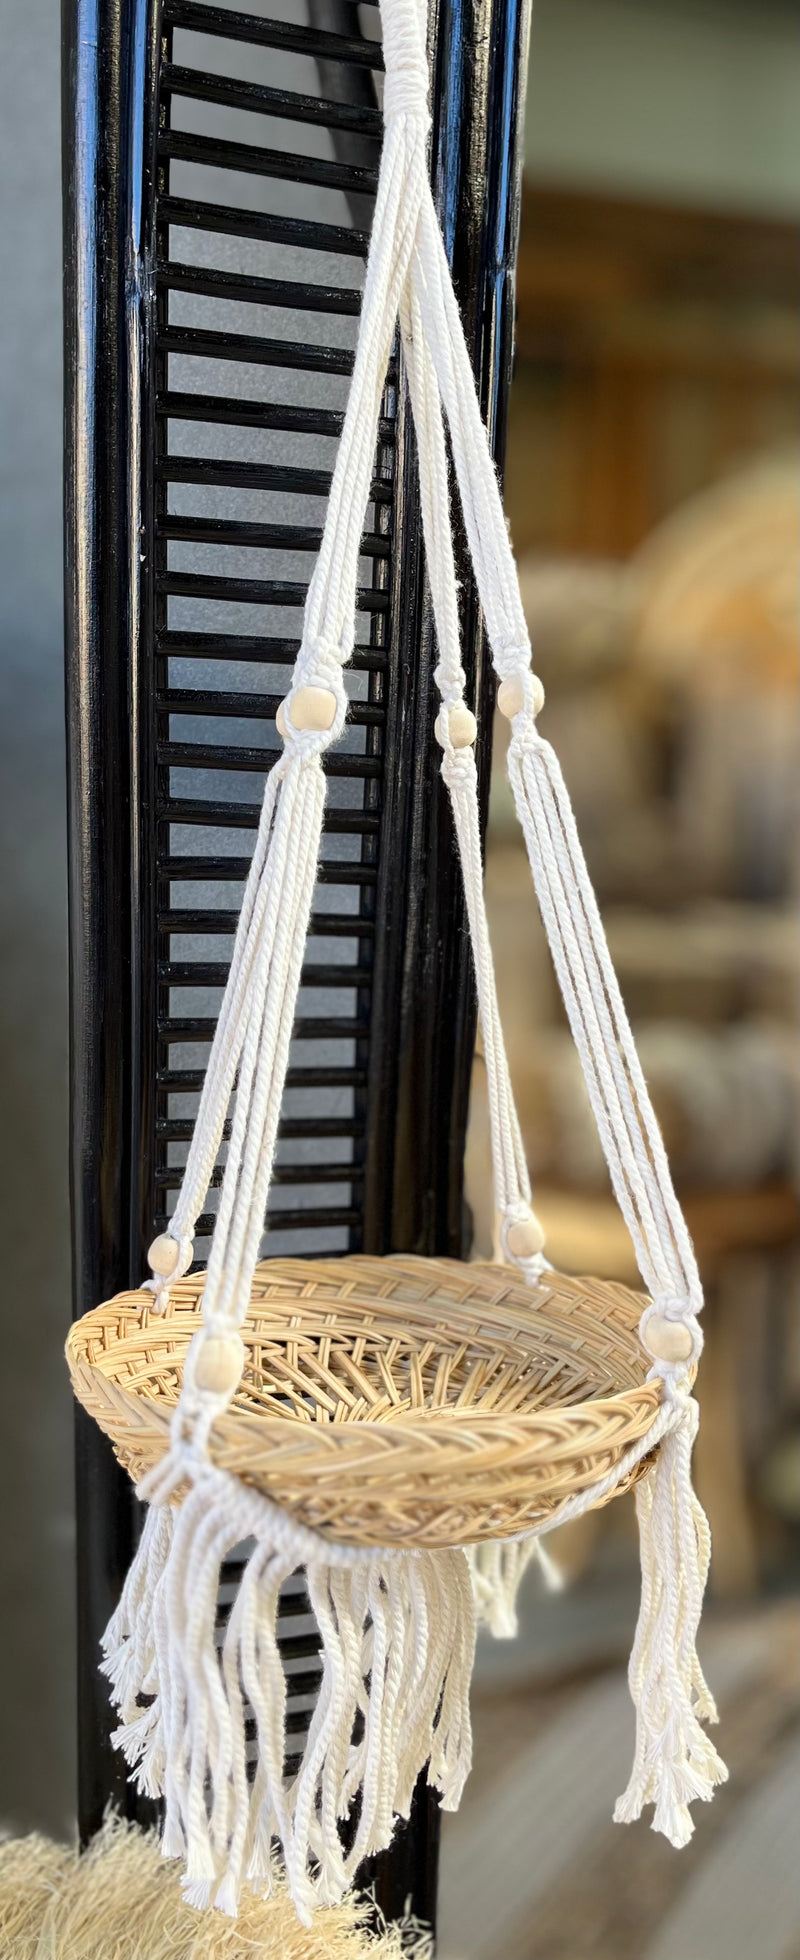 Woven basket / plant hanger